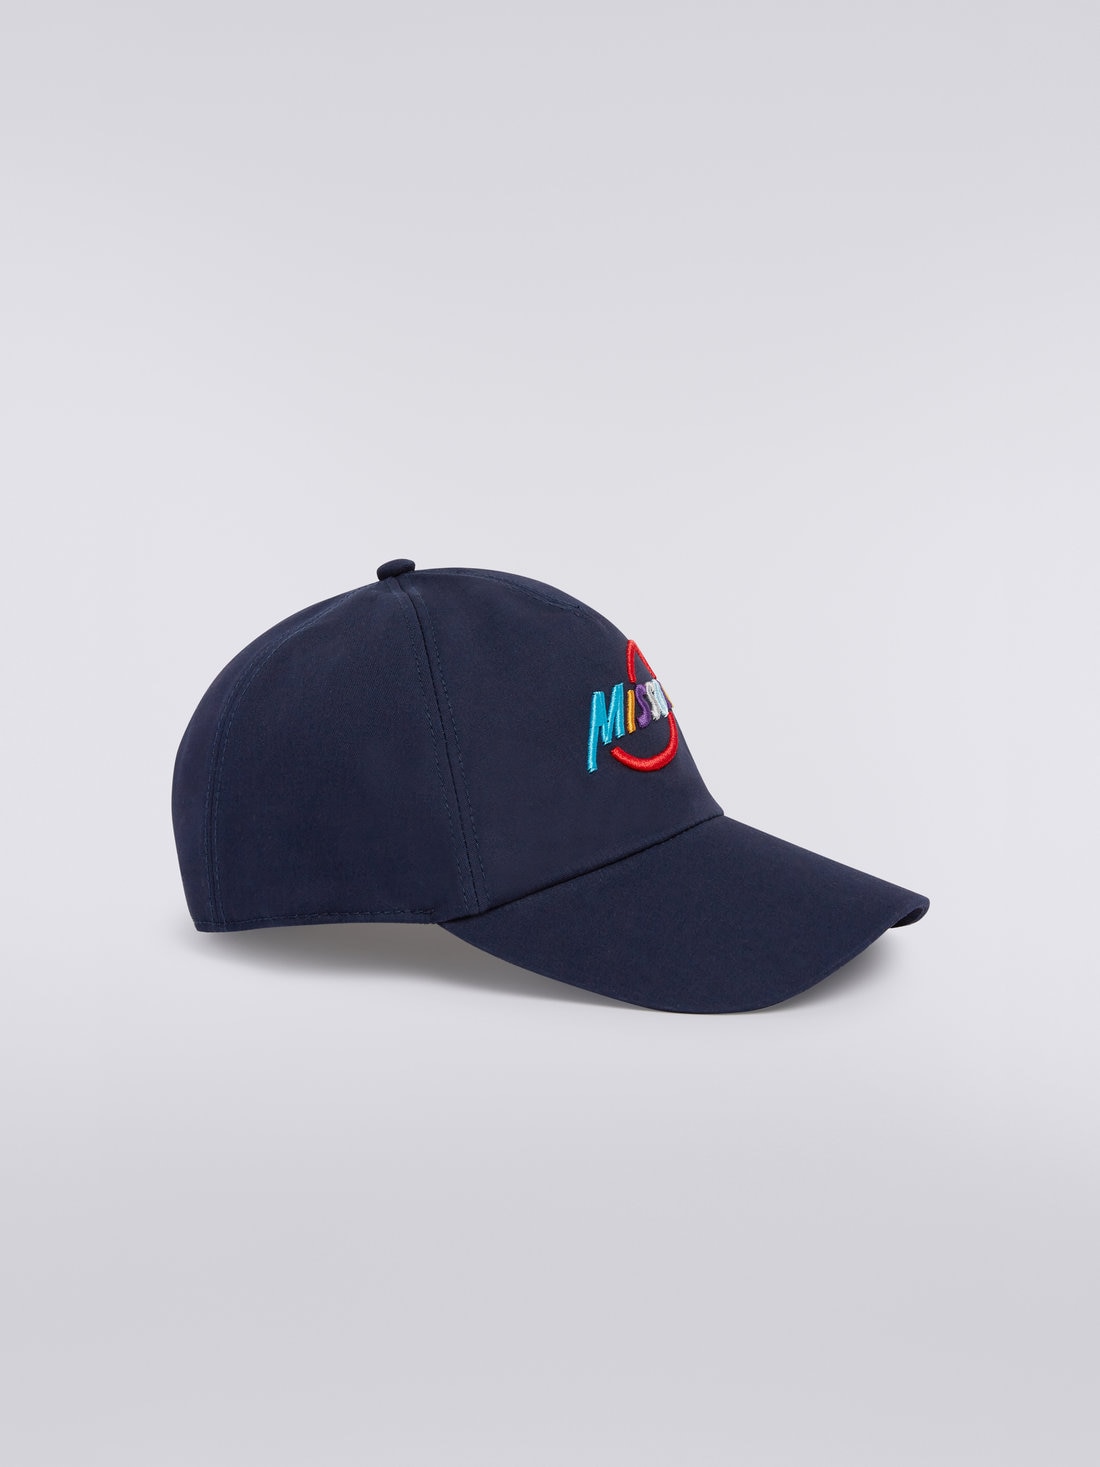 Cotton visor hat with multicoloured logo lettering, Blue - 8051575776946 - 1